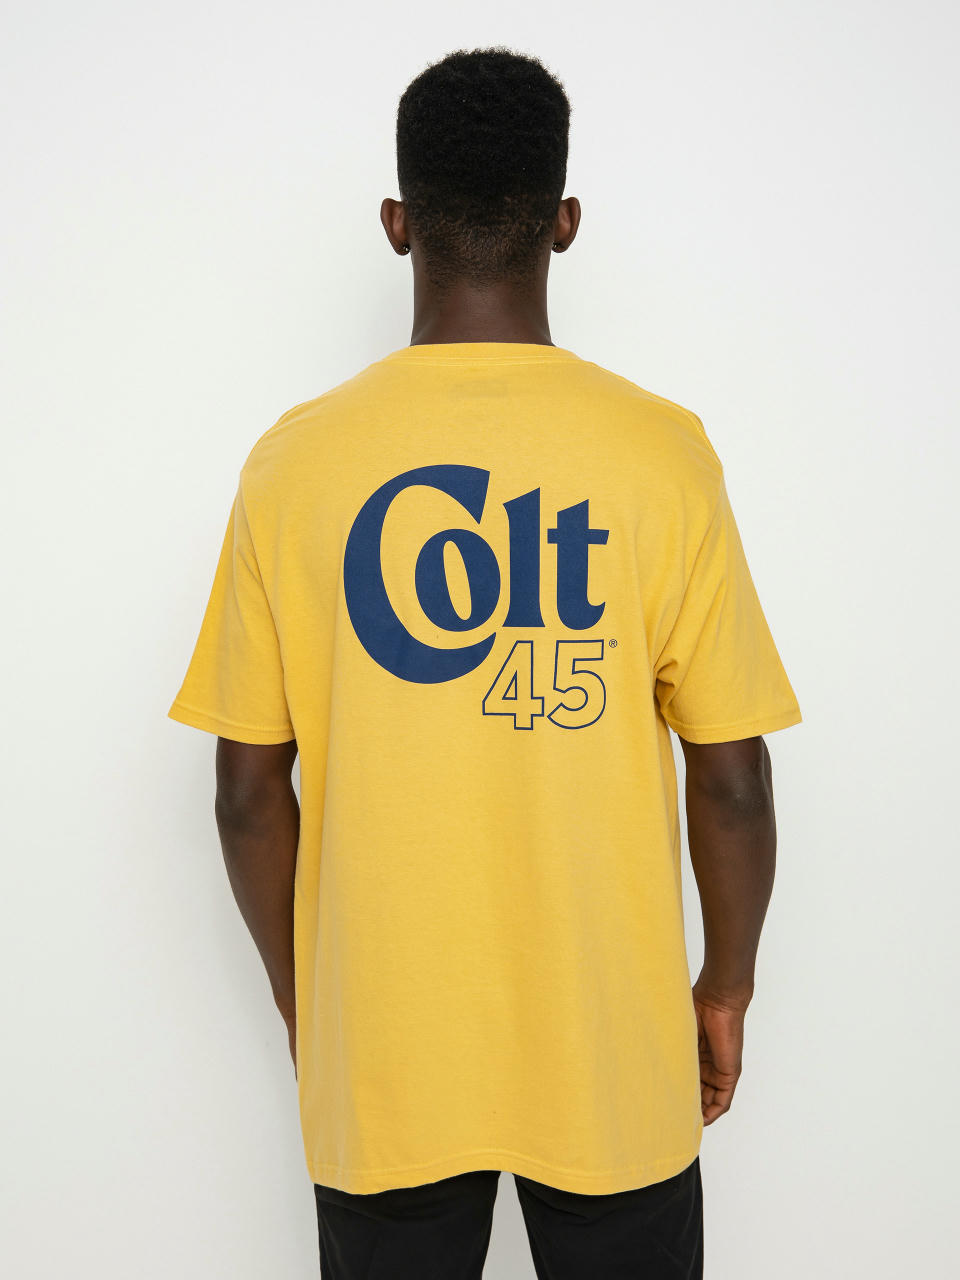 T-shirt Etnies Colt 45 Arrow (gold)